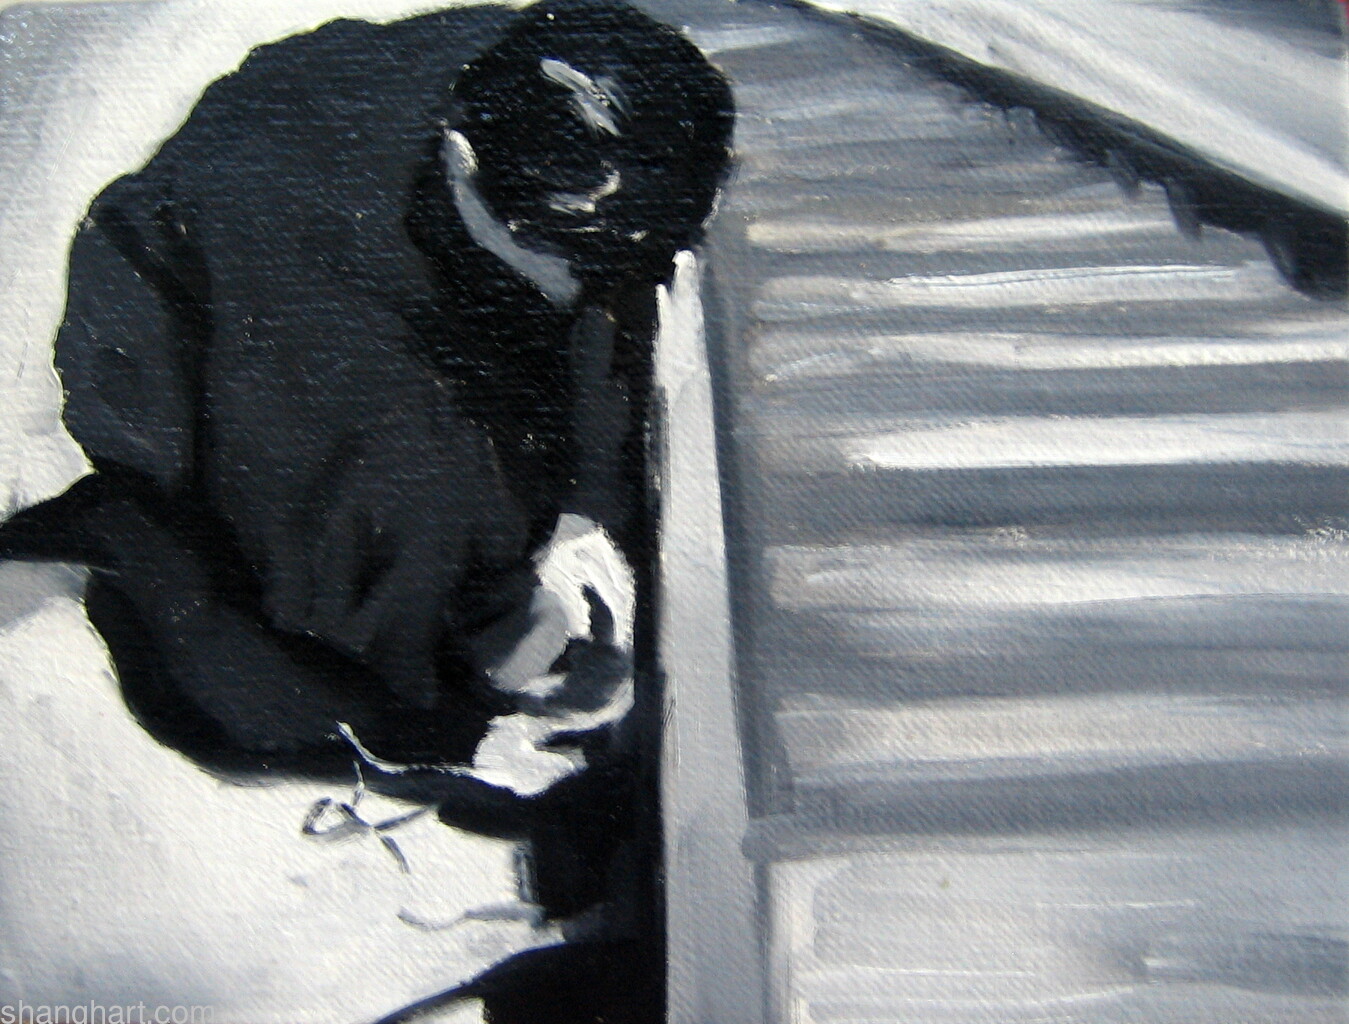 2009, 15x20cm, oil on canvas